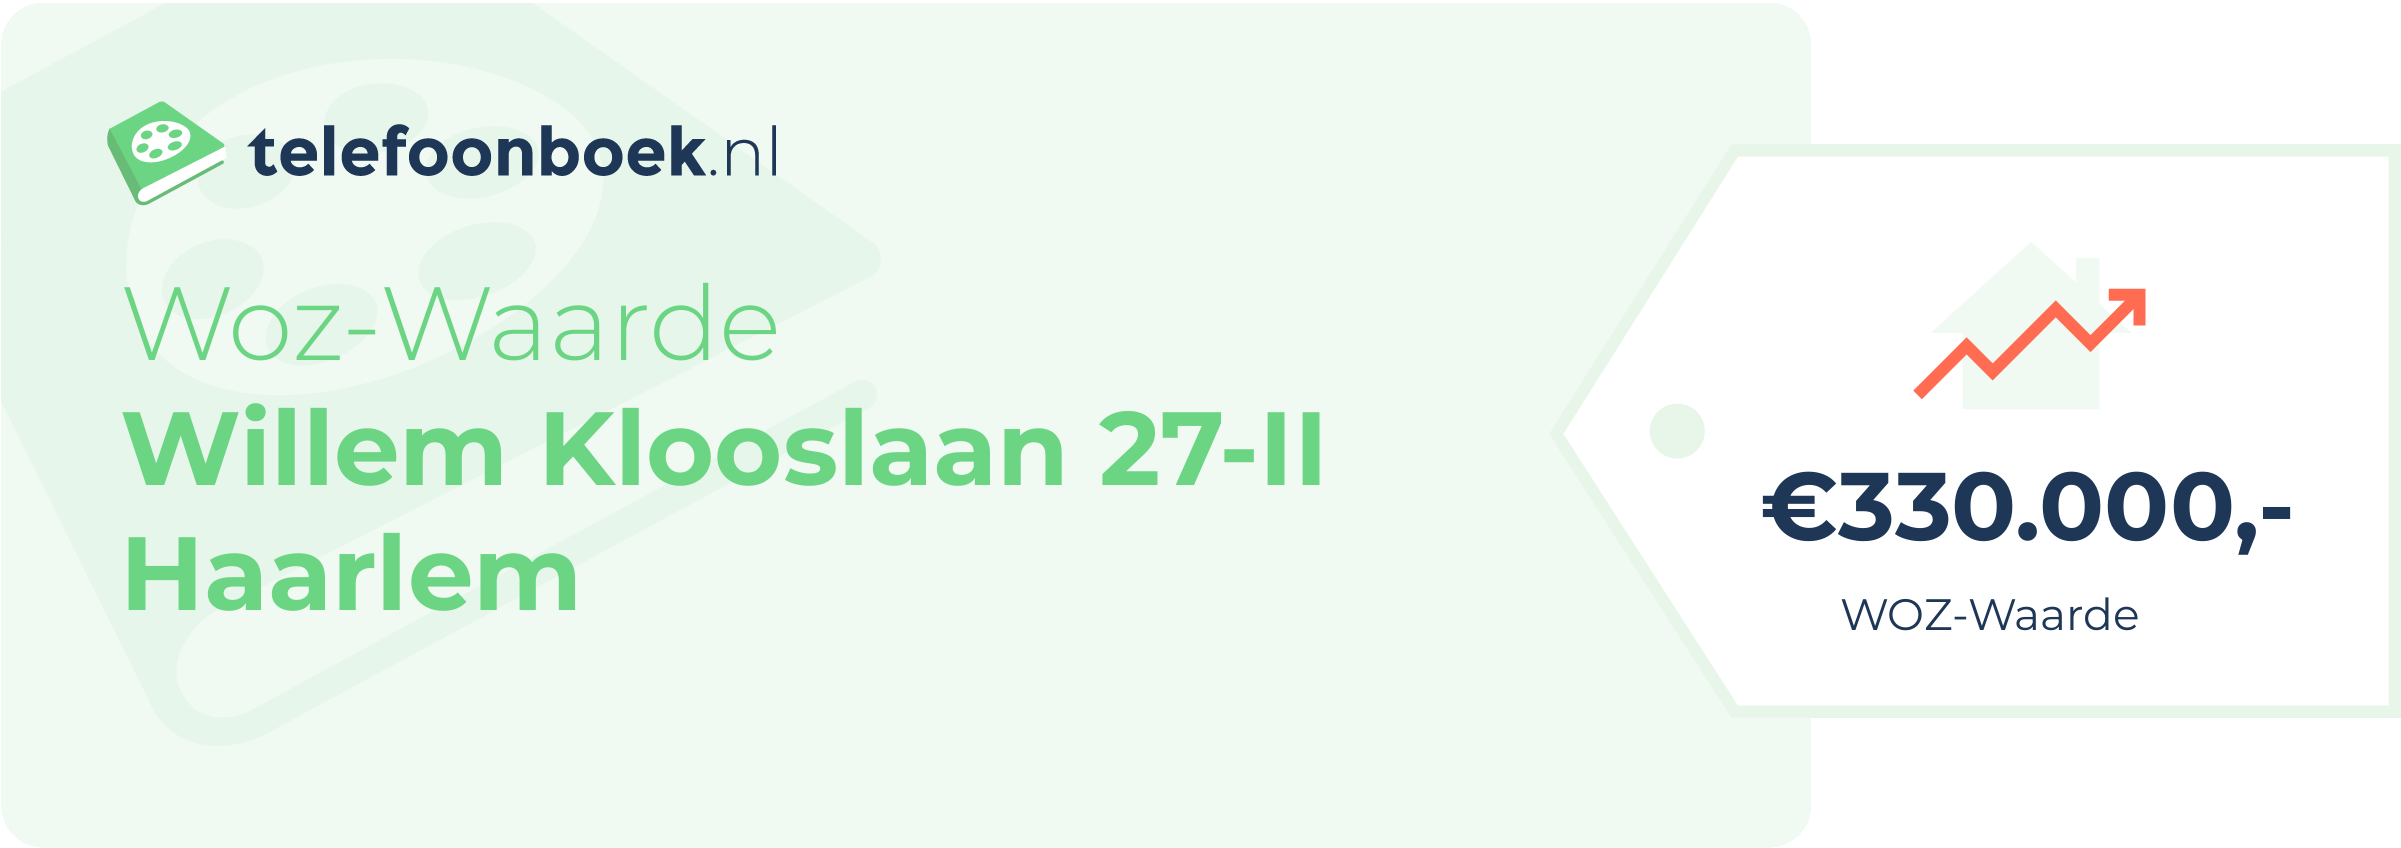 WOZ-waarde Willem Klooslaan 27-II Haarlem